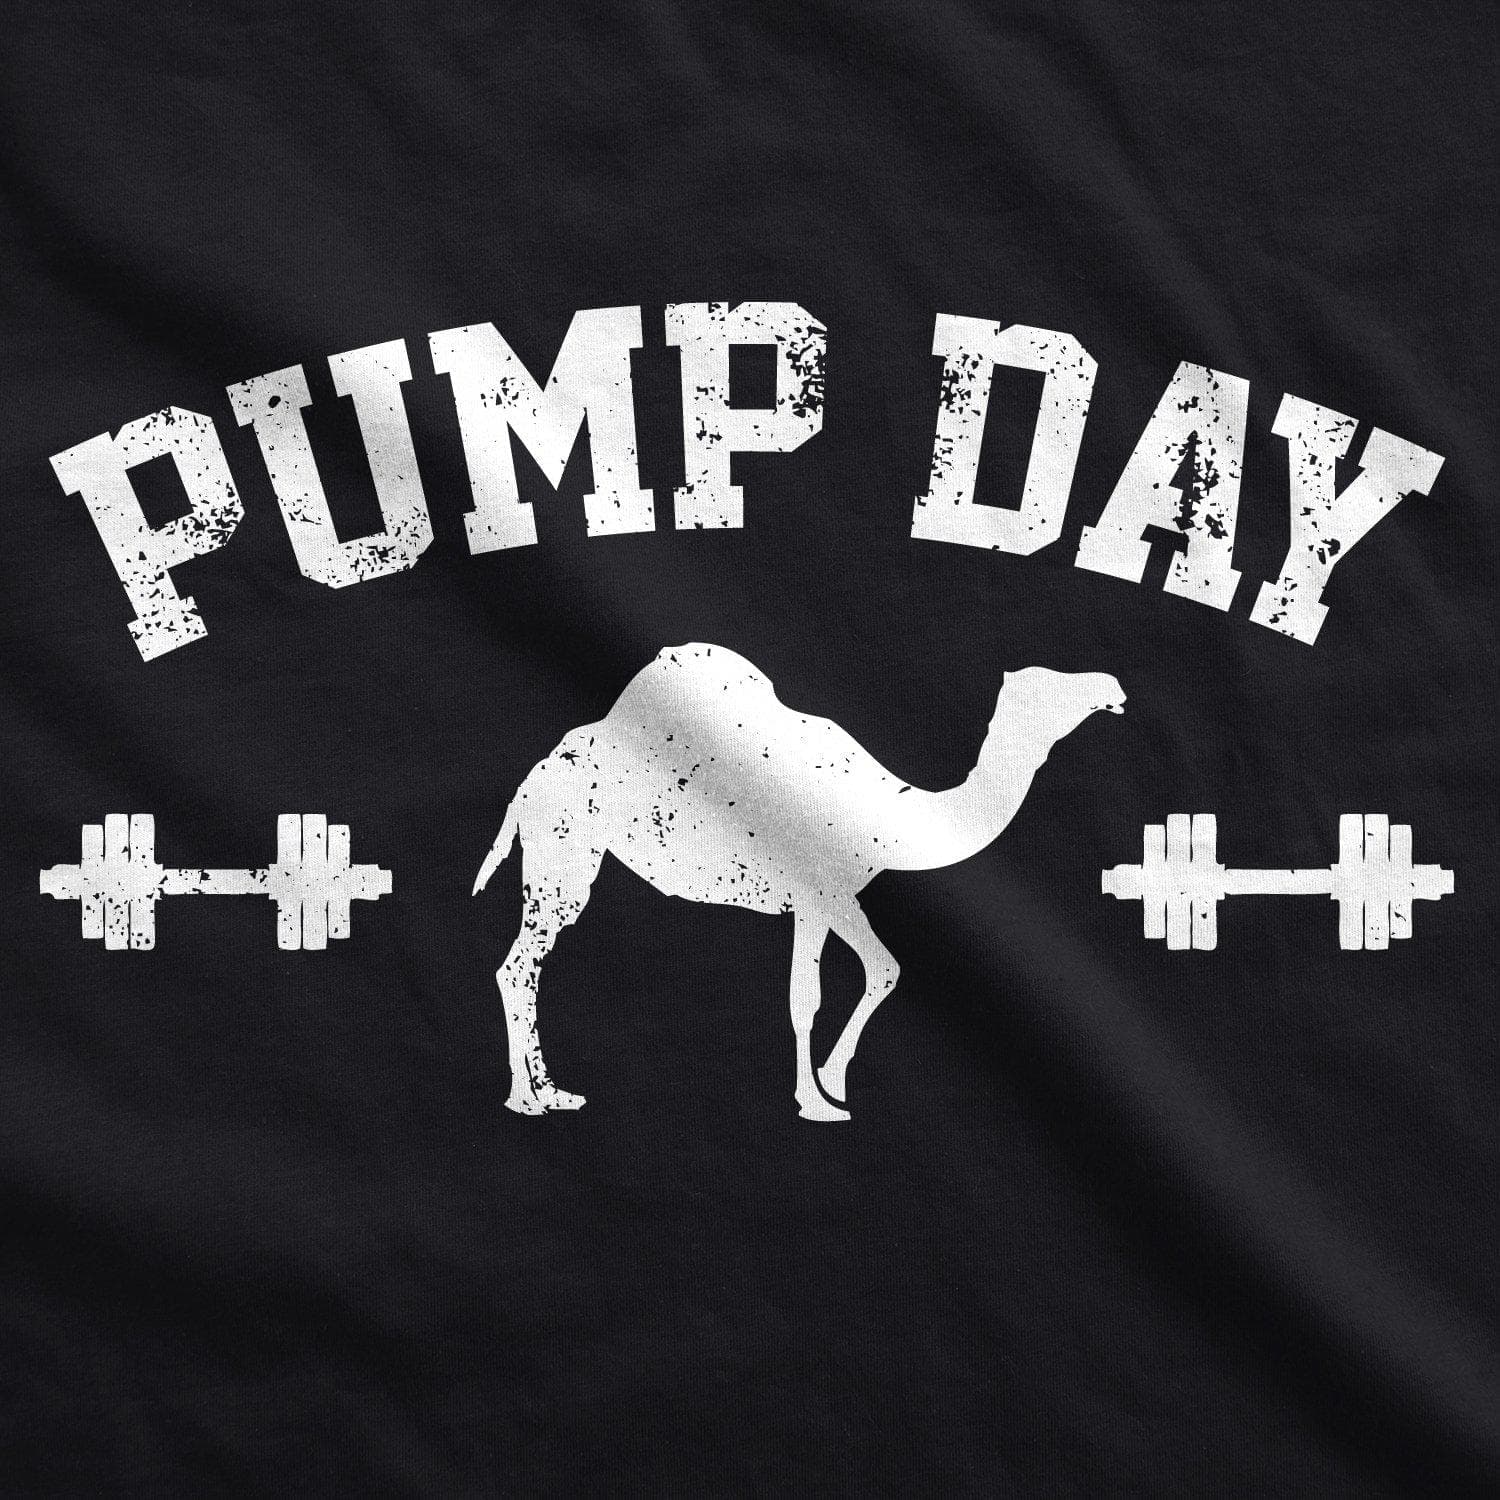 Pump Day Men's Tank Top  -  Crazy Dog T-Shirts